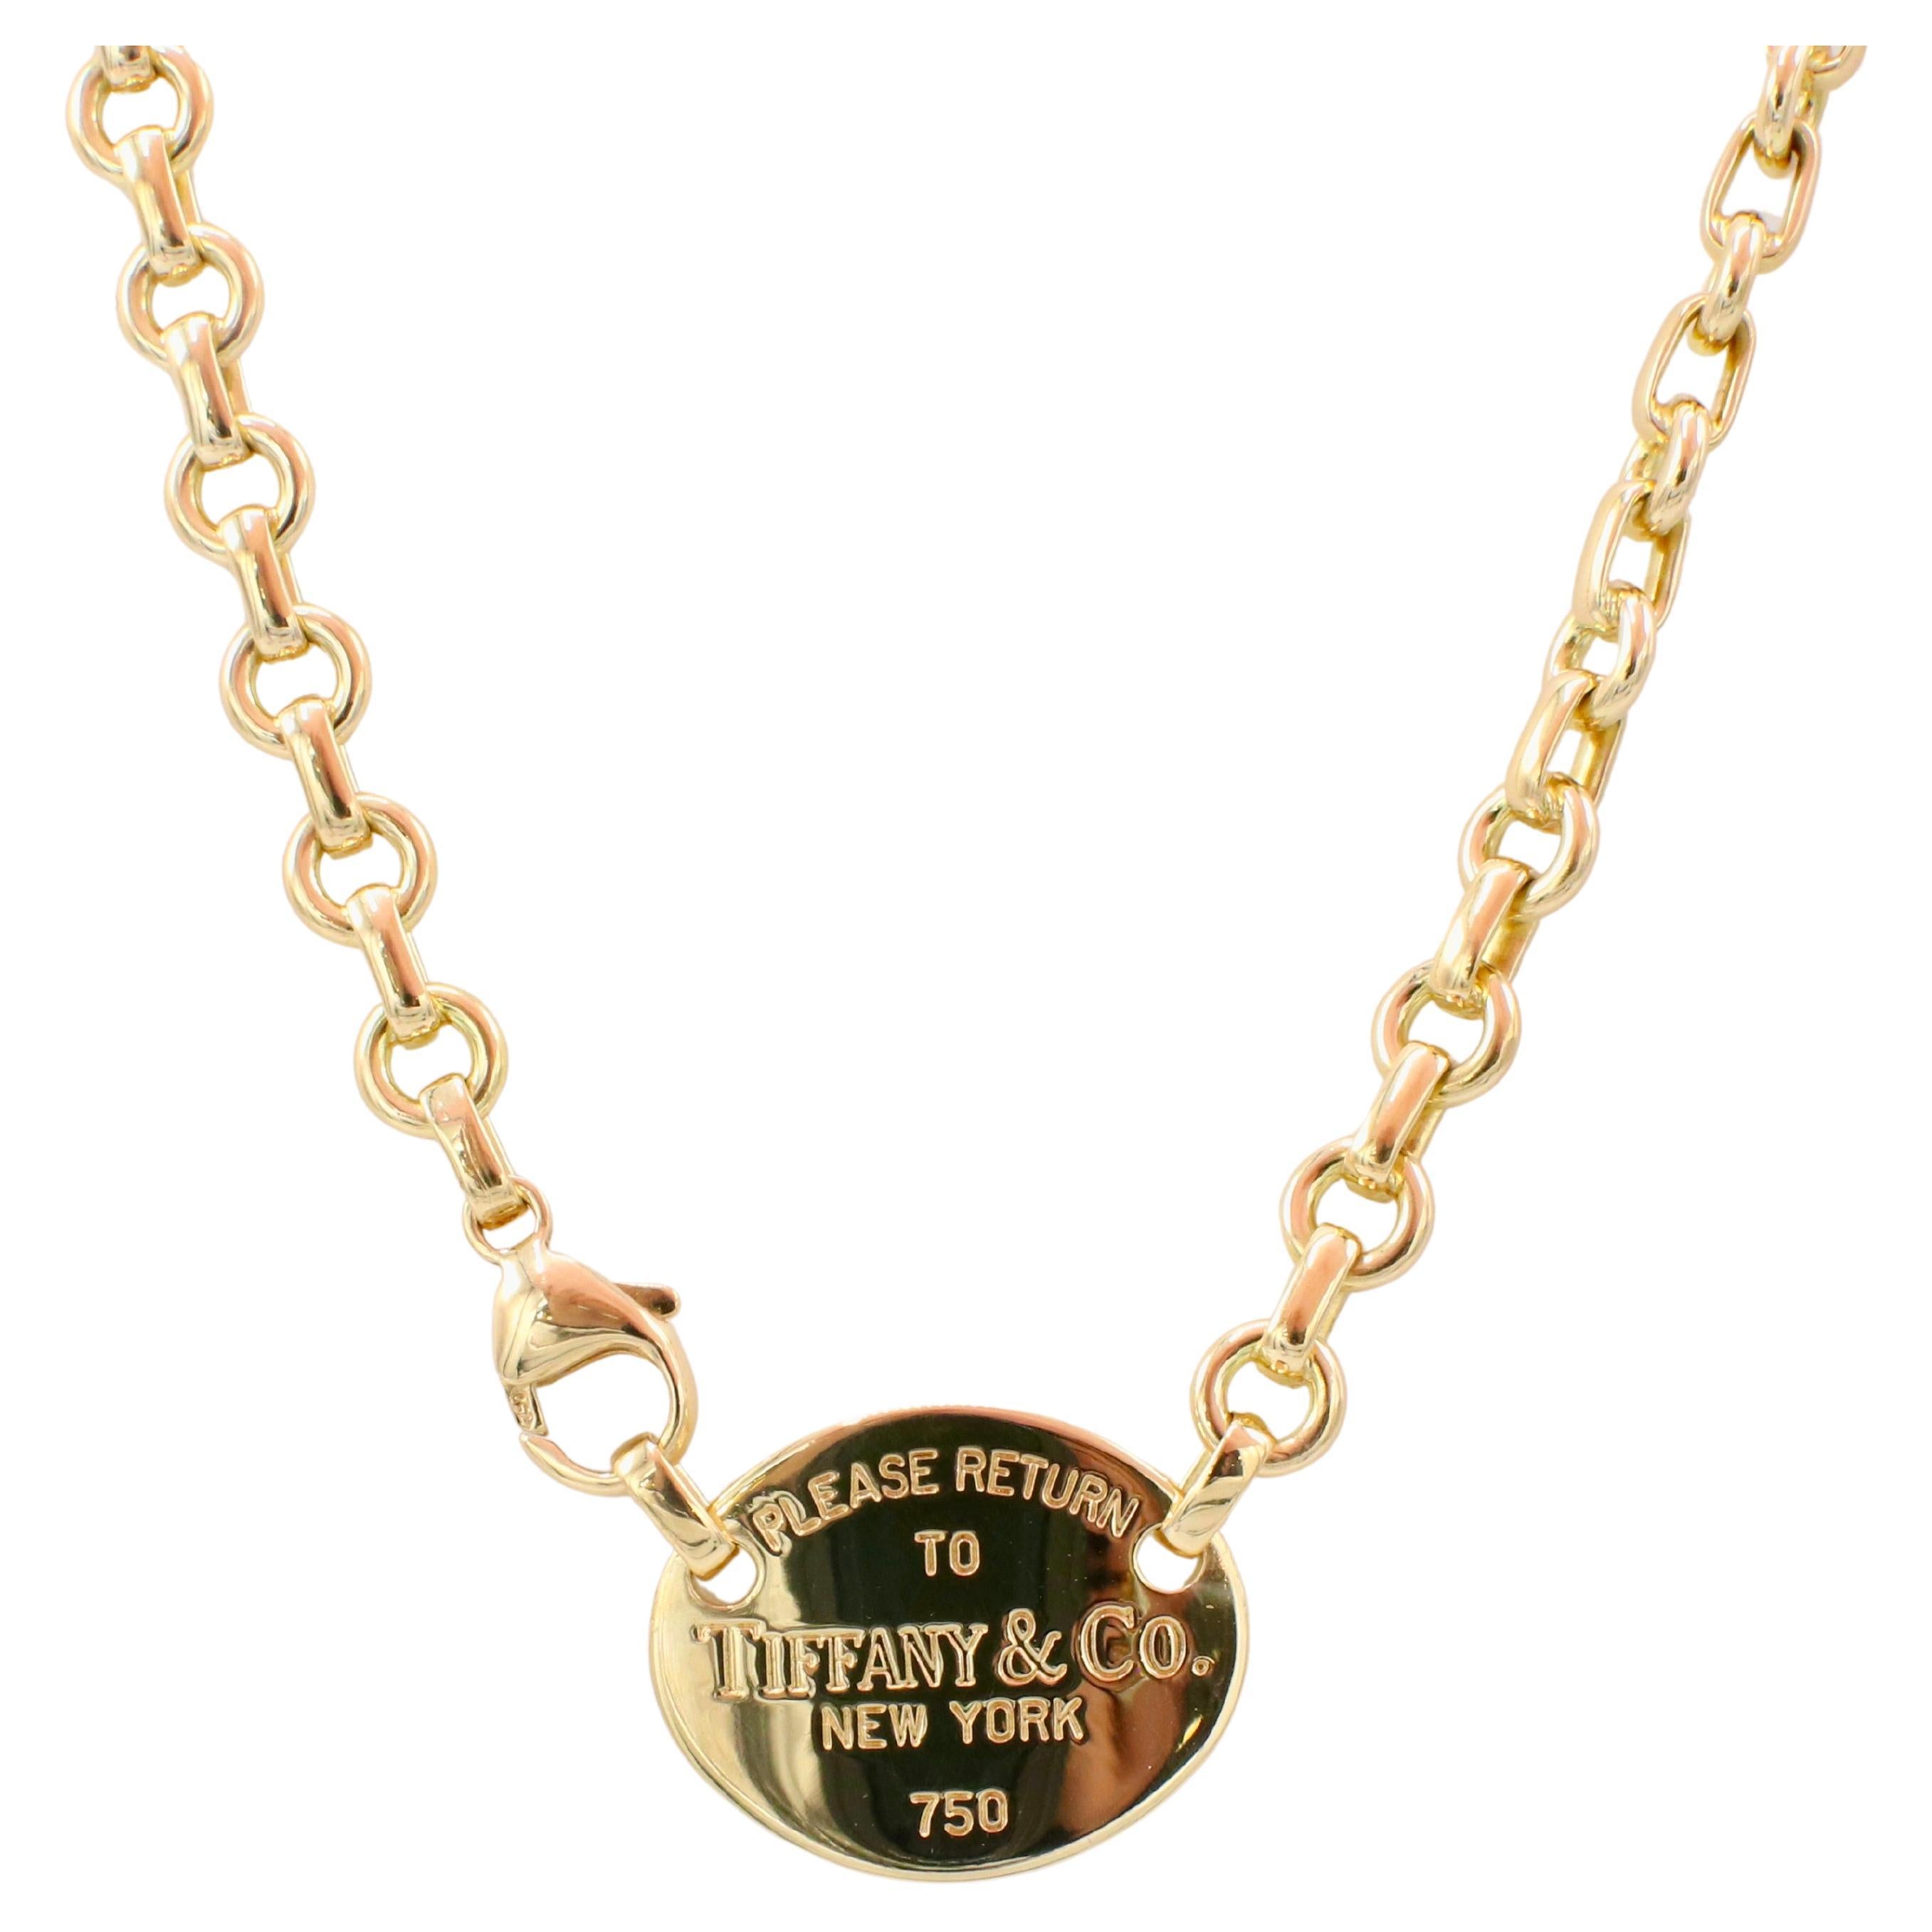 Tiffany & Co. Return To Tiffany 18 Karat Yellow Gold Chain Link Necklace